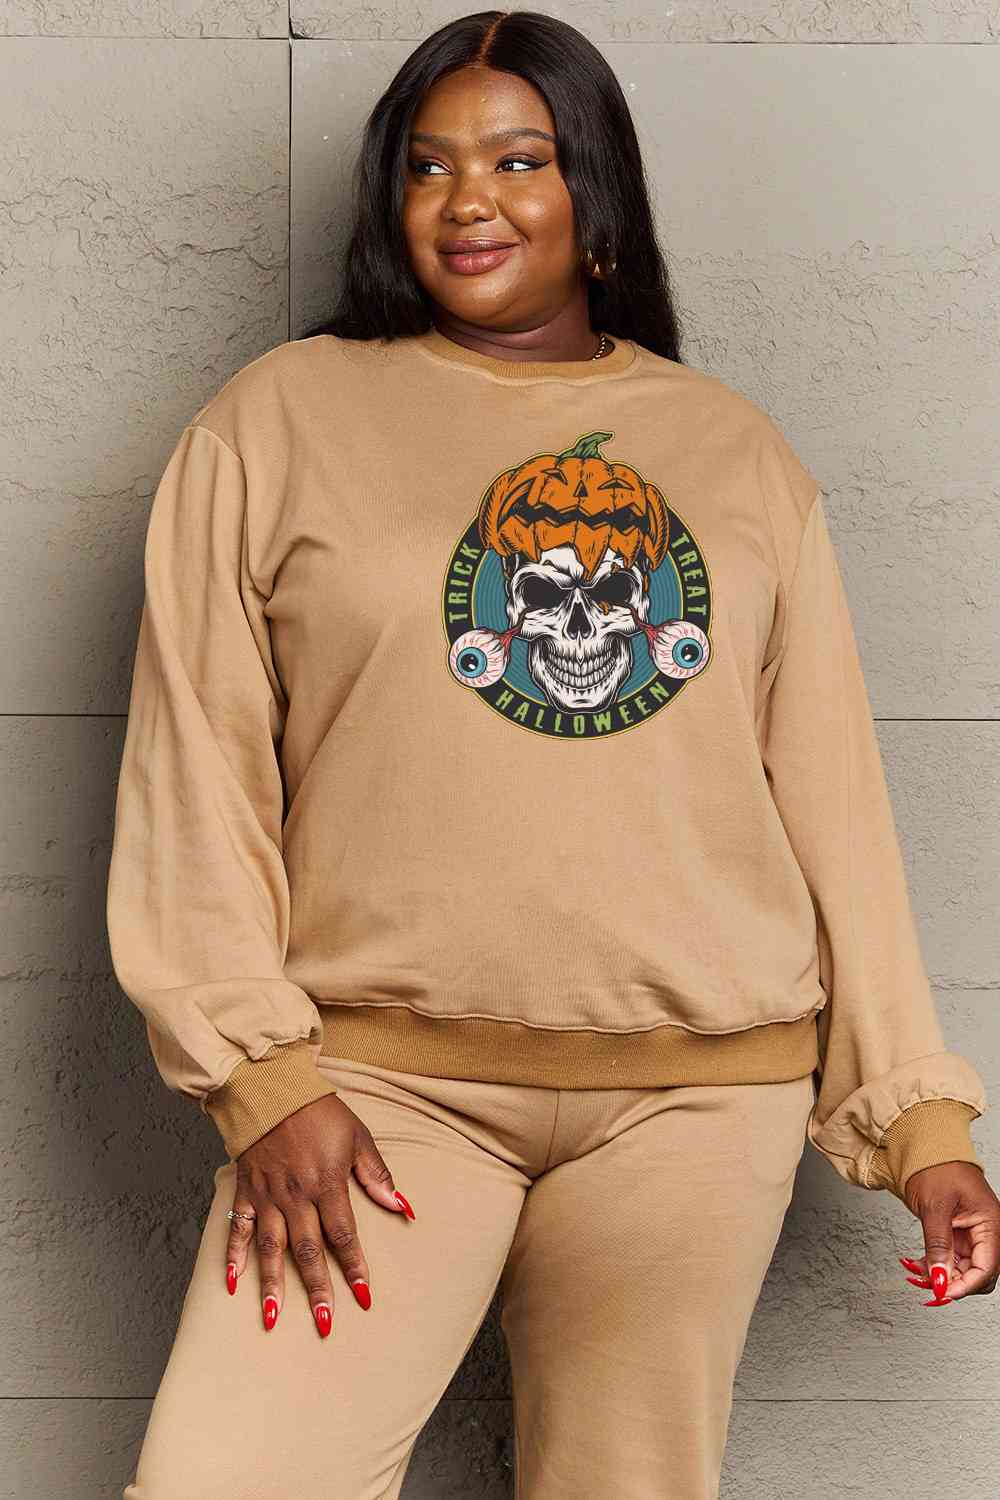 Simply Love Full Size Skull Graphic Sweatshirt - Guy Christopher 